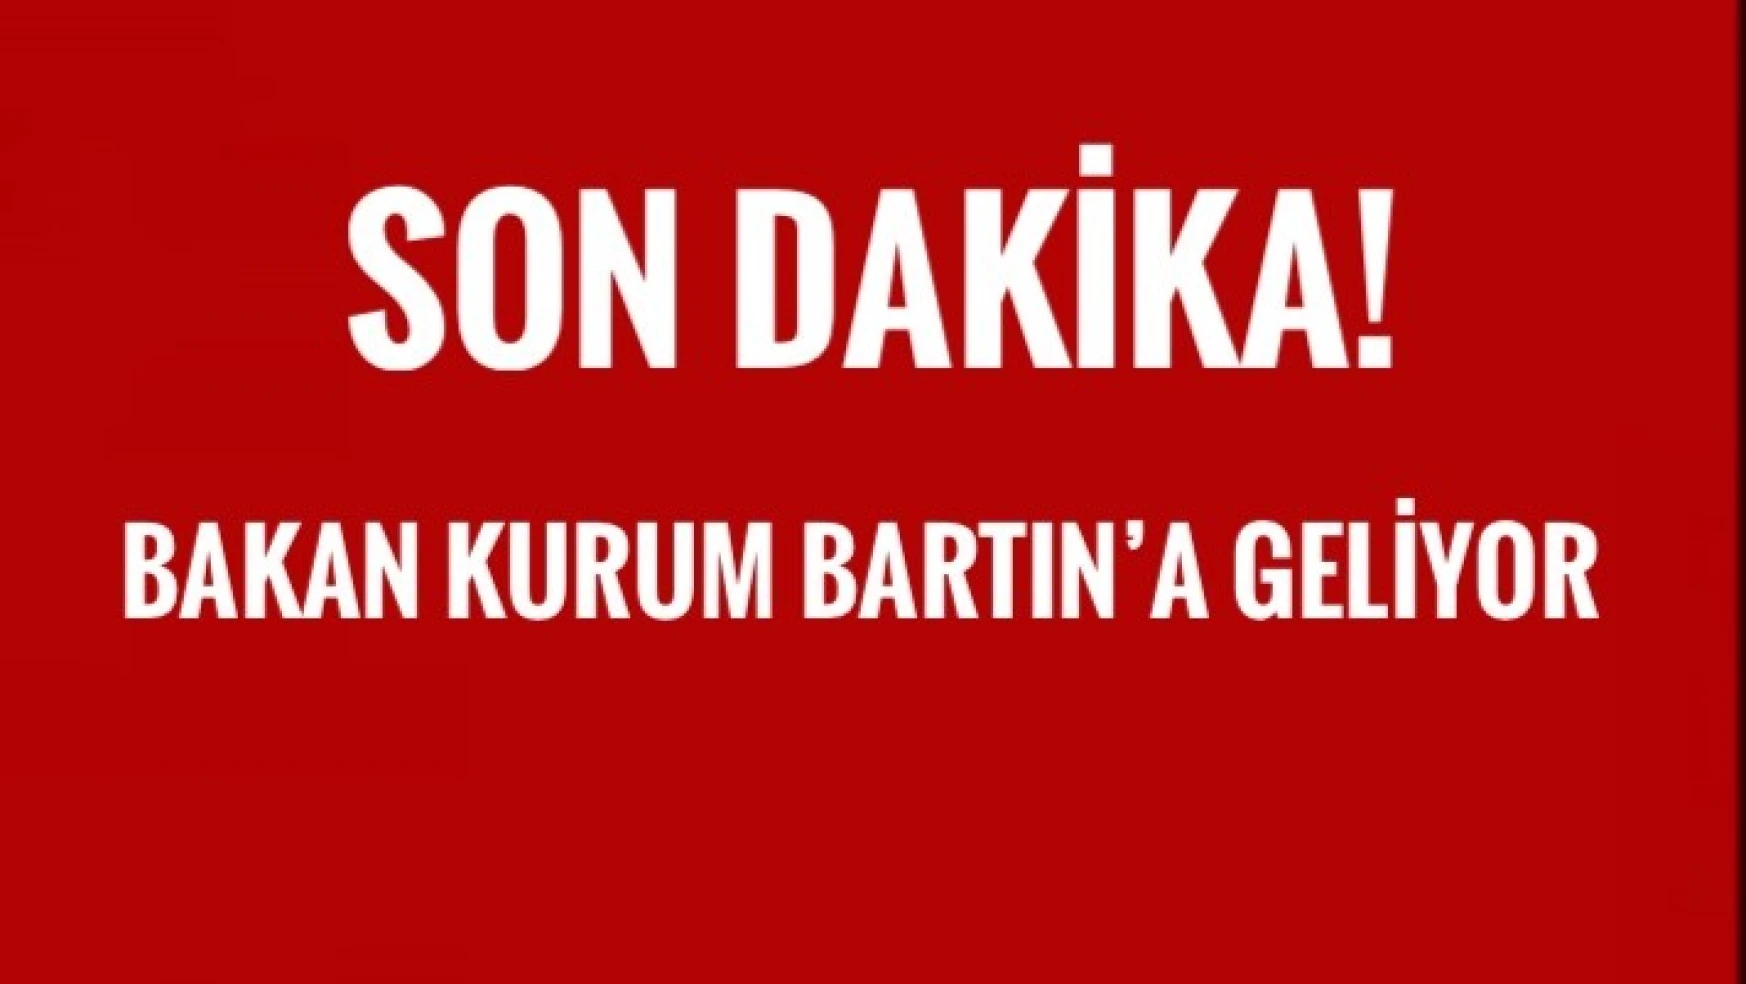 BAKAN KURUM BARTIN'A GELİYOR